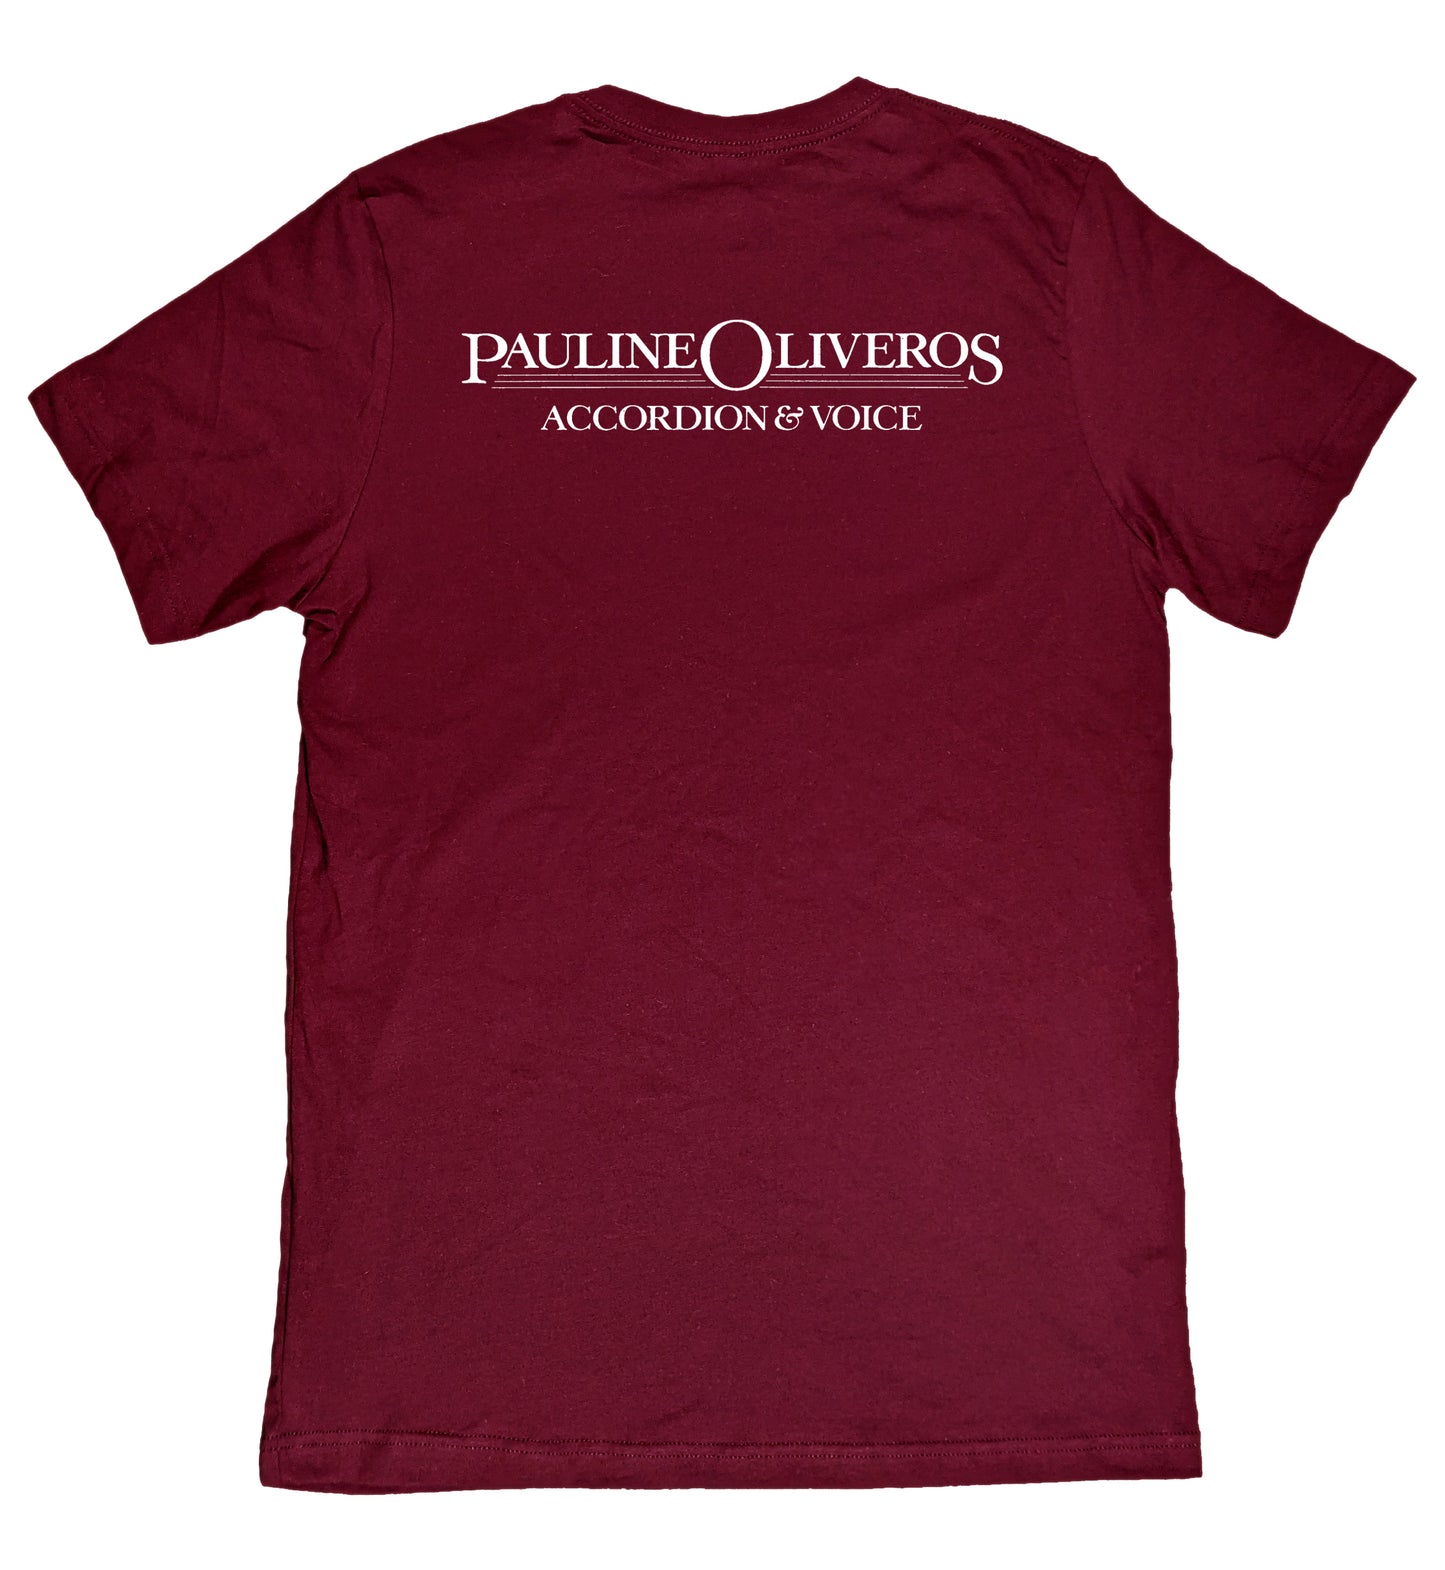 Pauline Oliveros Accordion & Voice T Shirt